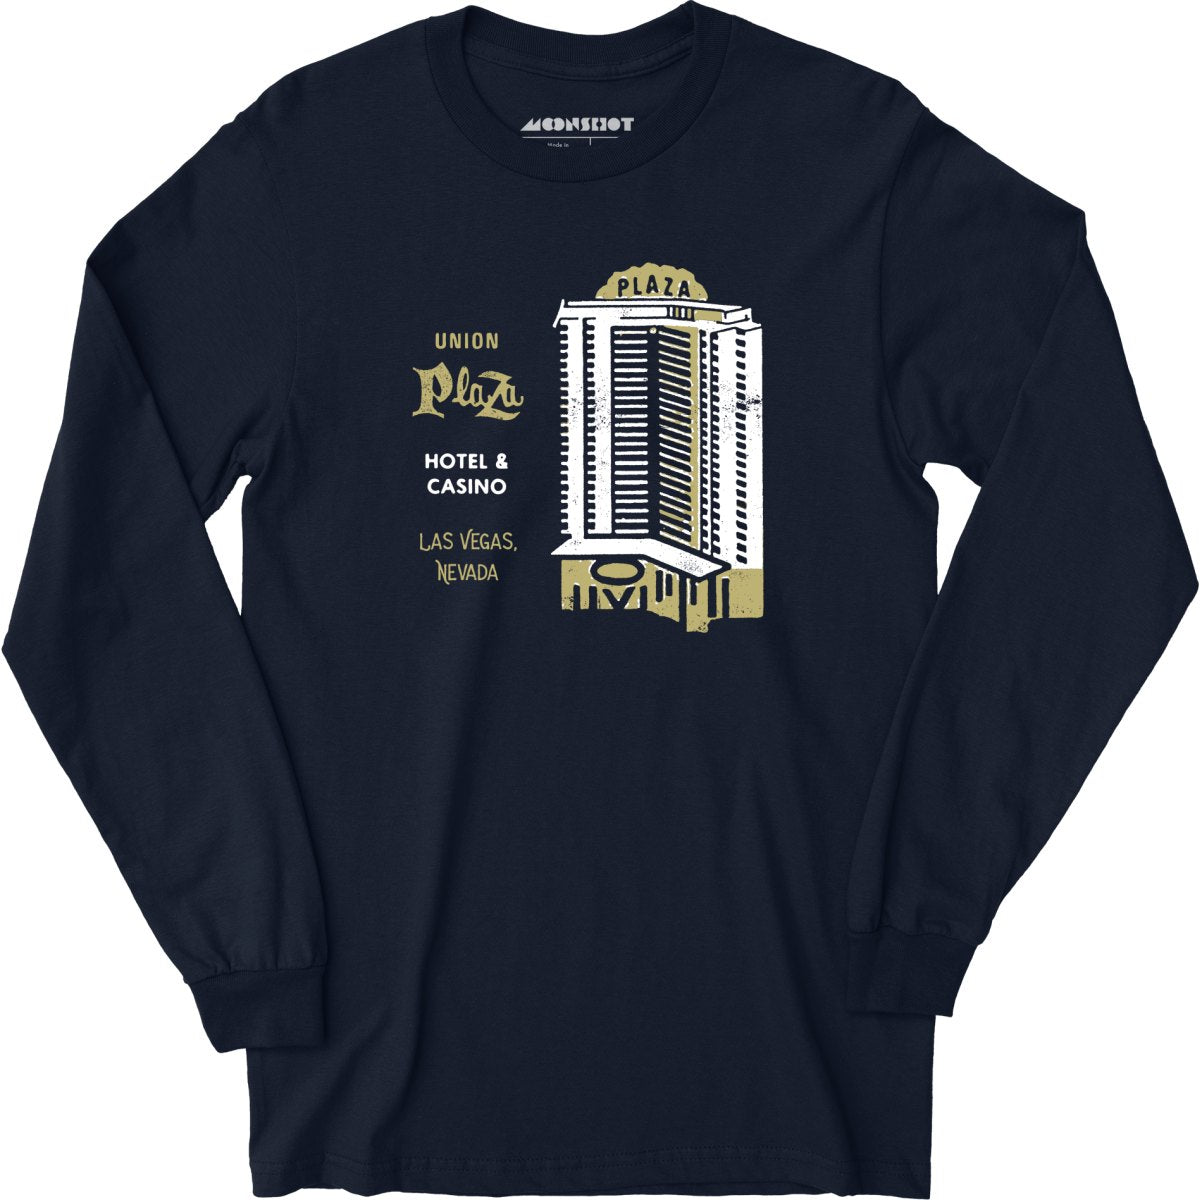 Union Plaza Hotel & Casino v2 - Vintage Las Vegas - Long Sleeve T-Shirt